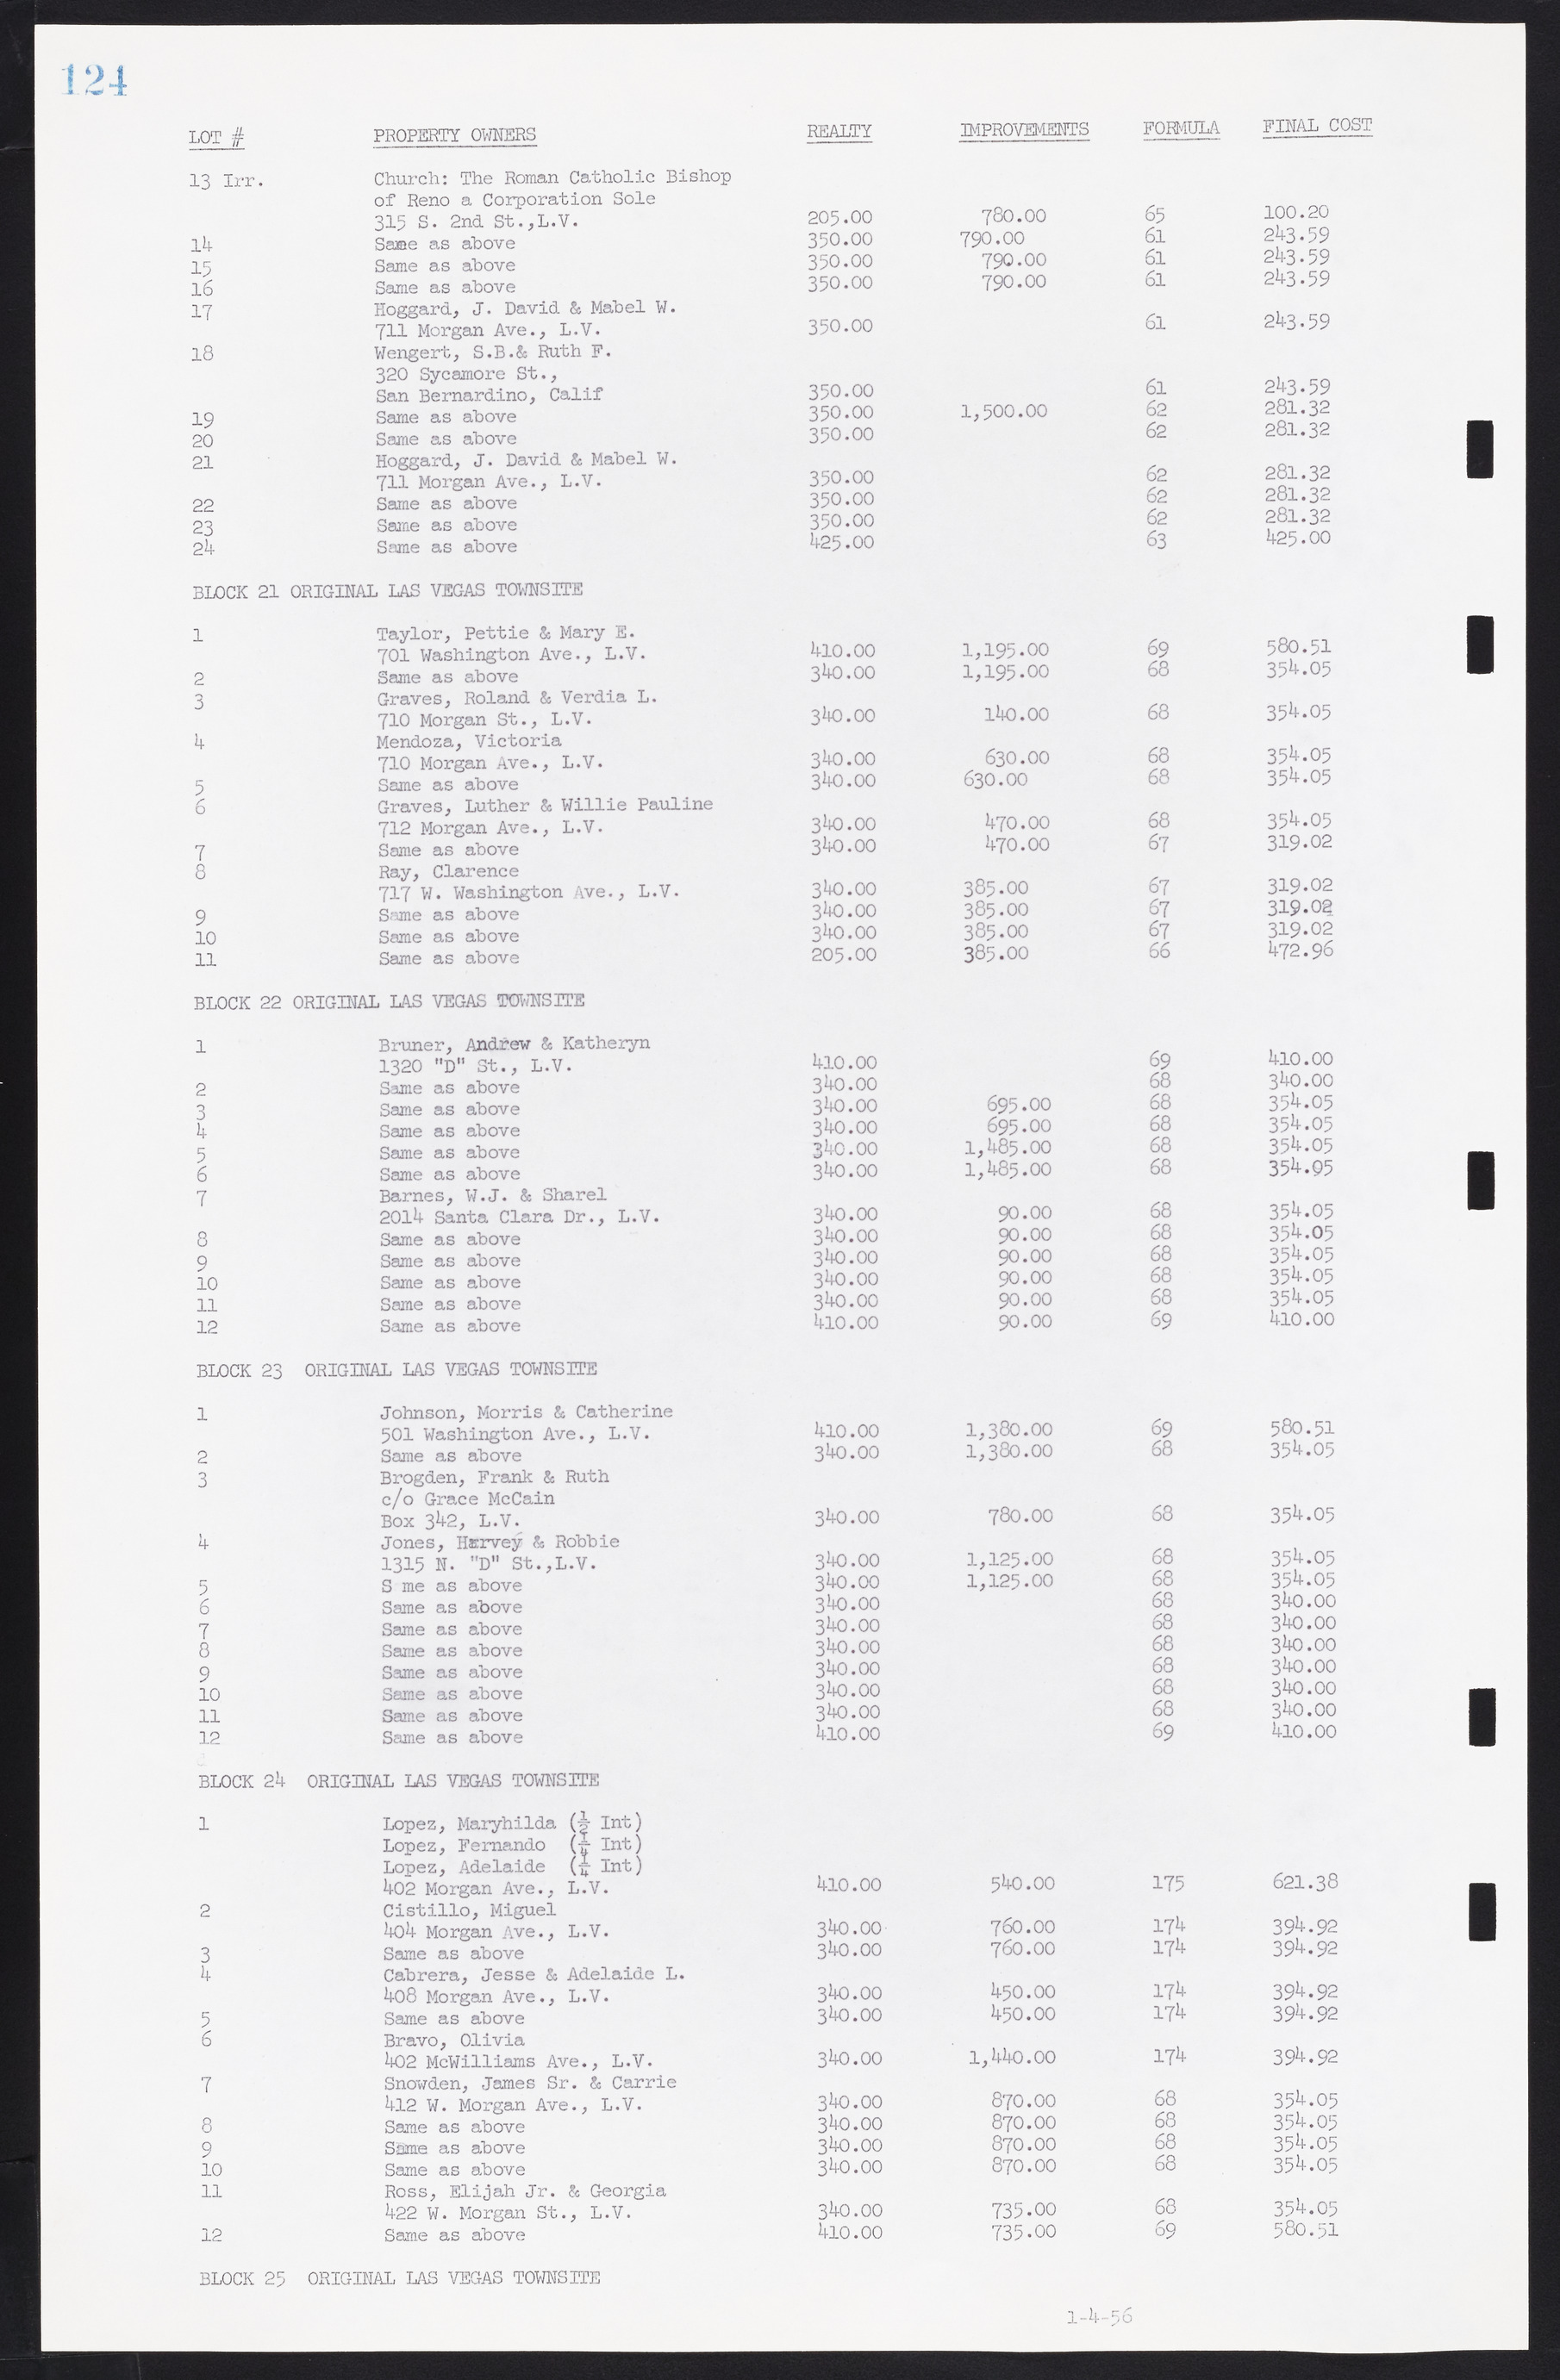 Las Vegas City Commission Minutes, September 21, 1955 to November 20, 1957, lvc000010-134